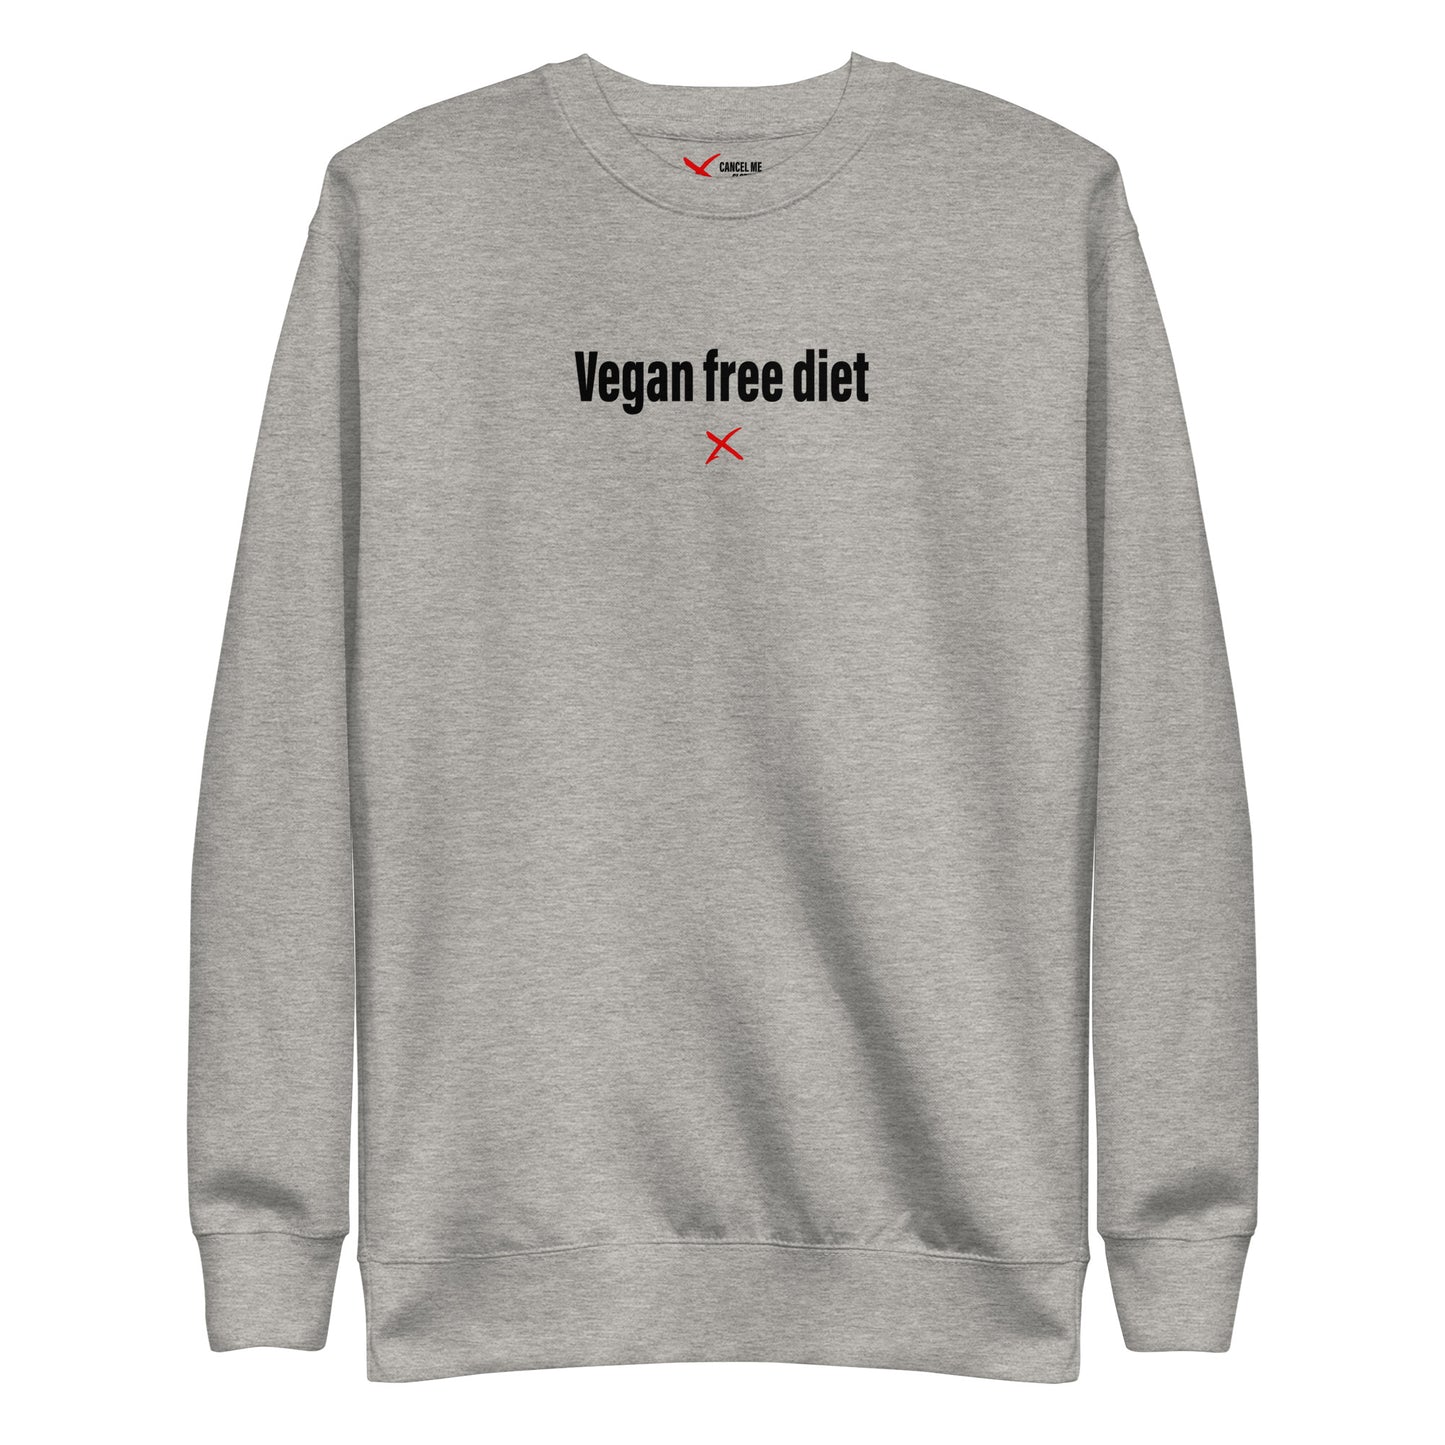 Vegan free diet - Sweatshirt